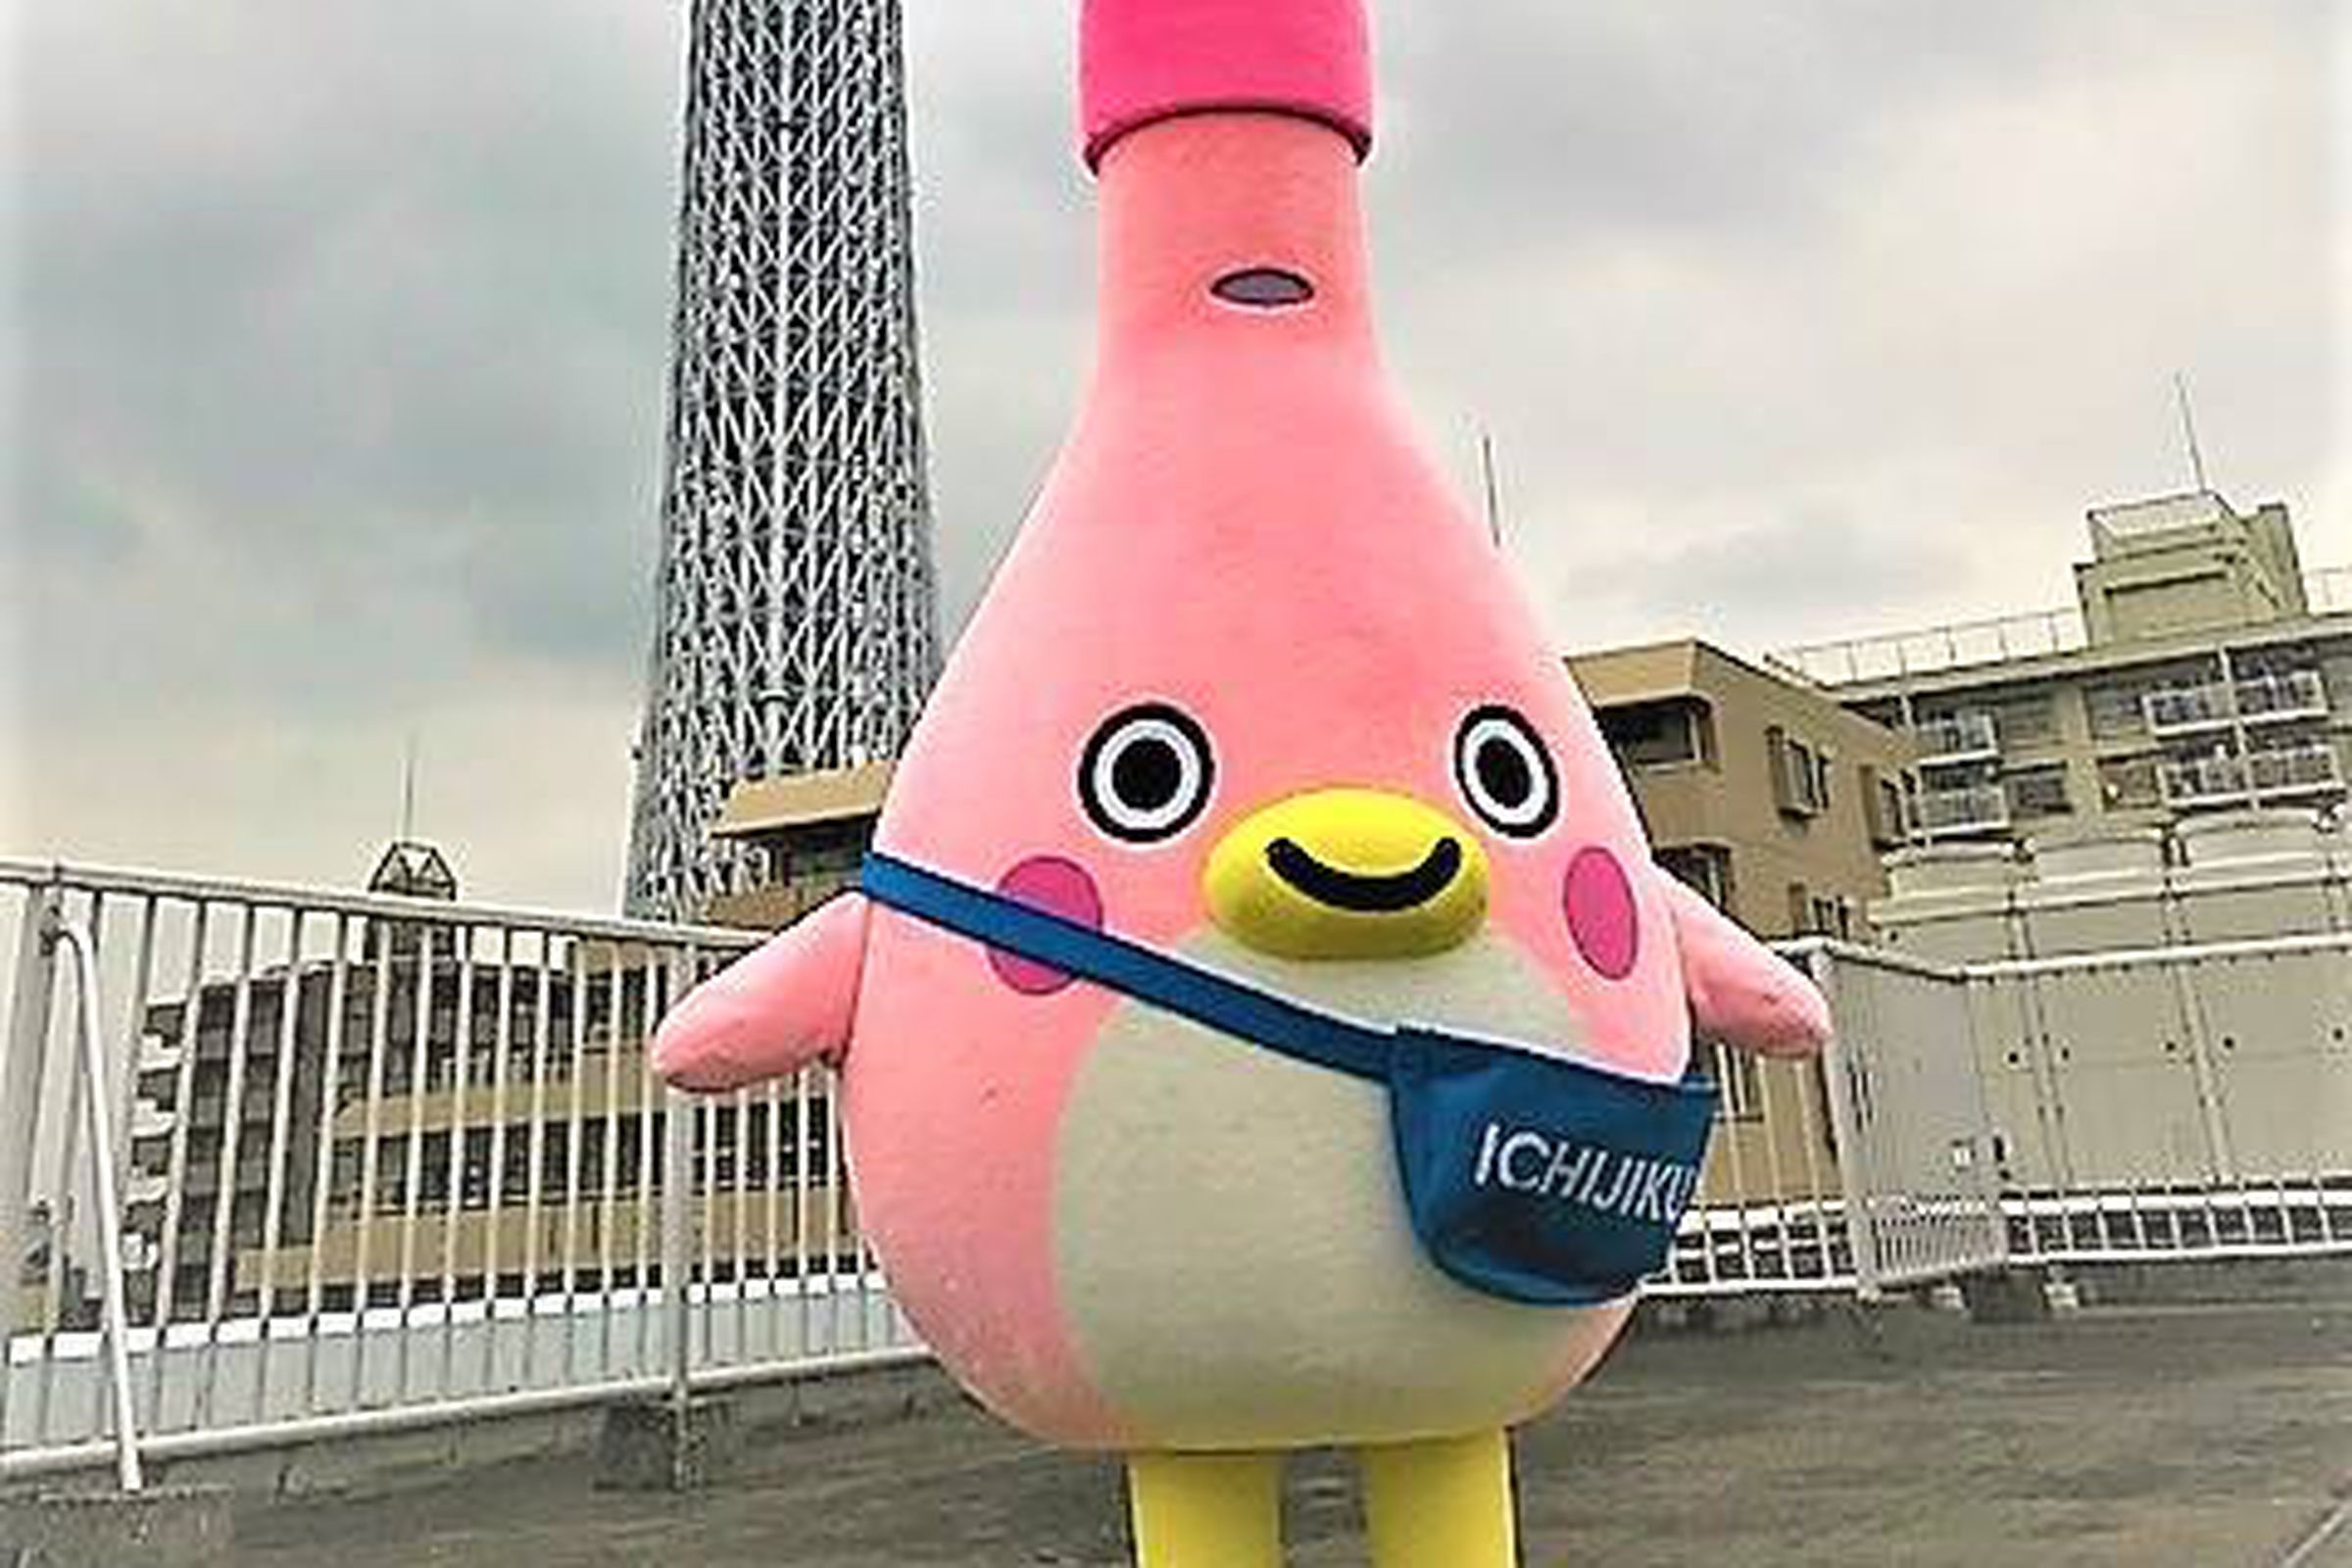 Kan-chan mascot for Ichijiku enema